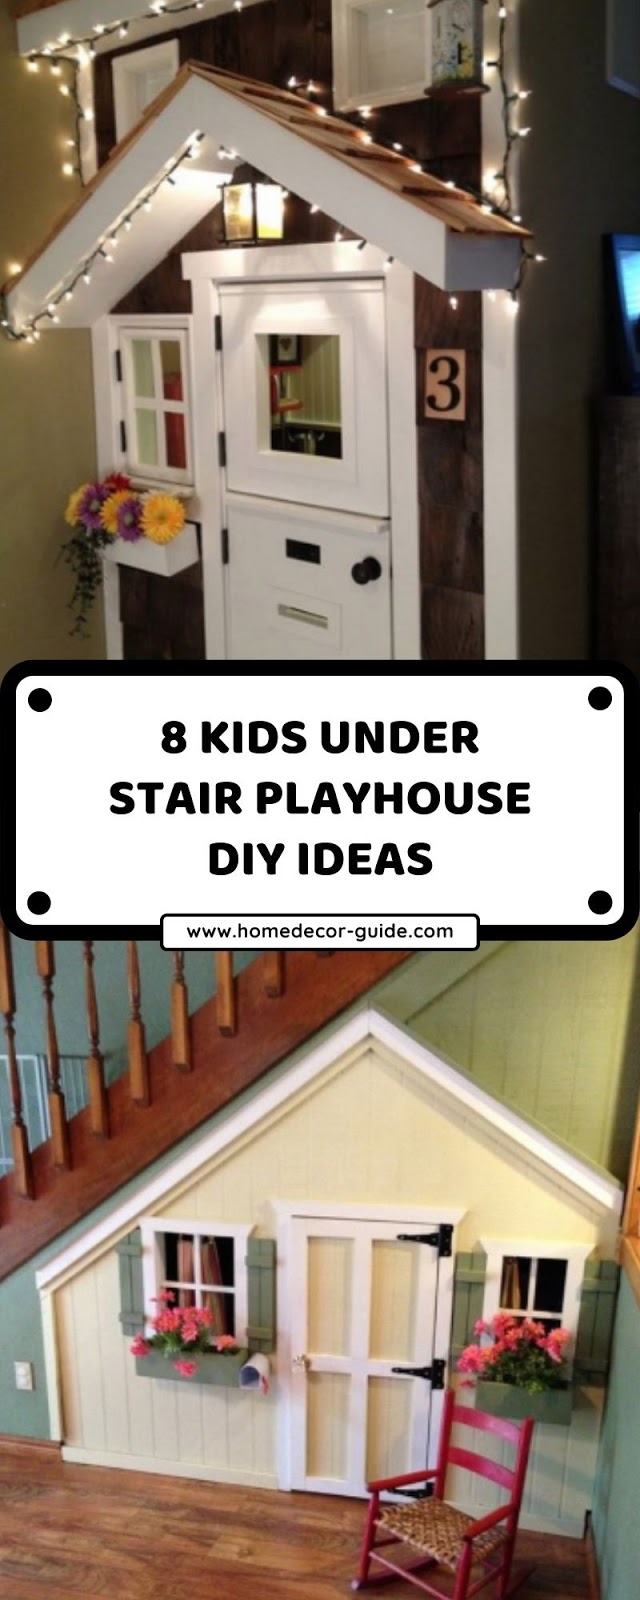 8 KIDS UNDER STAIR PLAYHOUSE DIY IDEAS